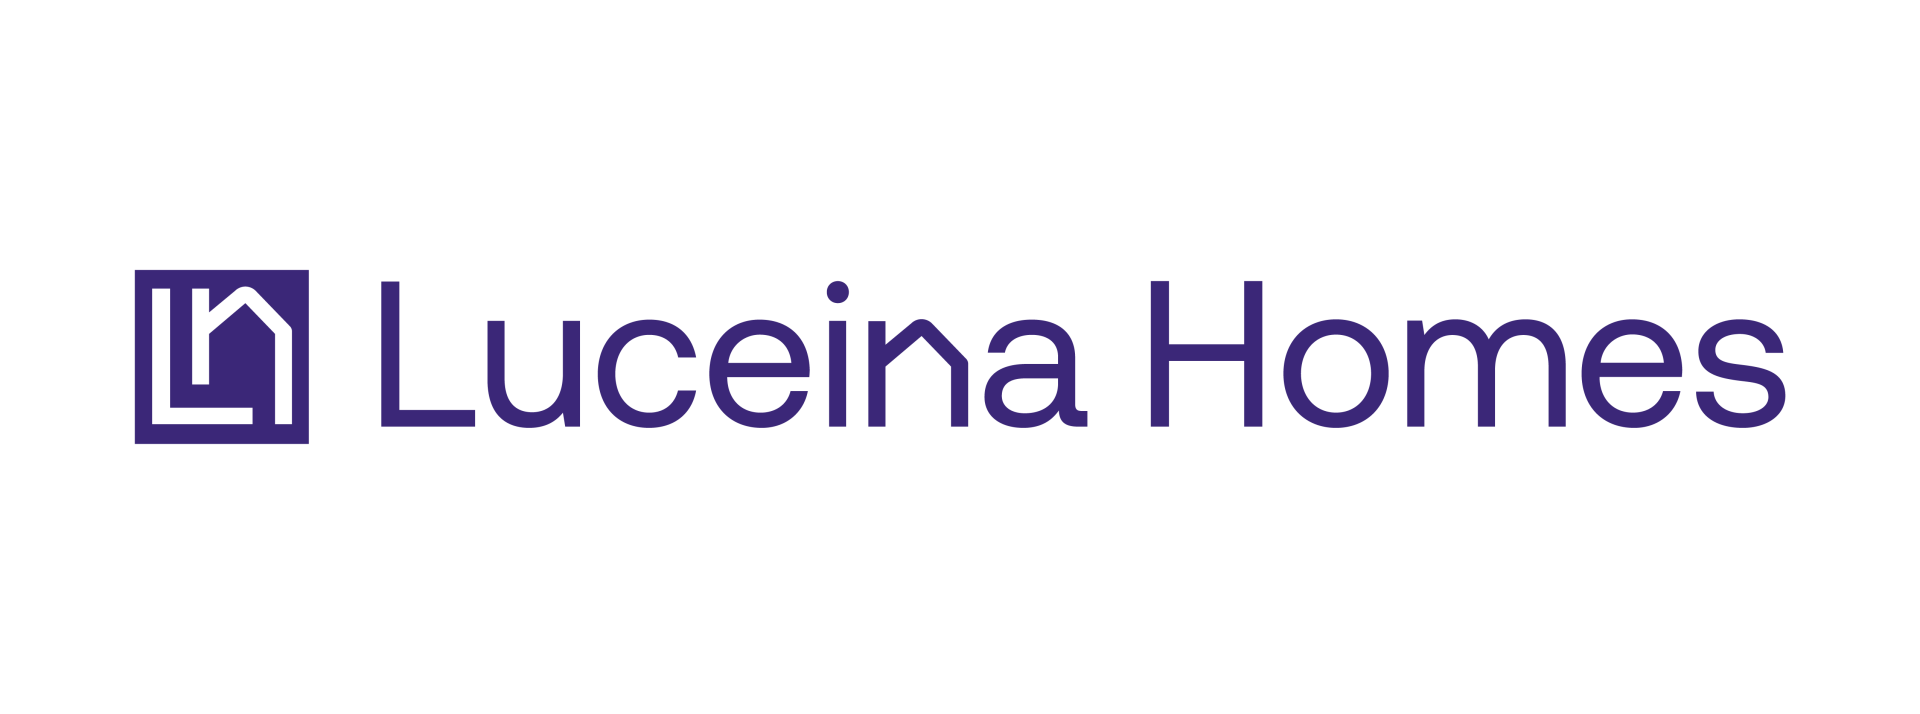 Luceina Homes Logo Purple